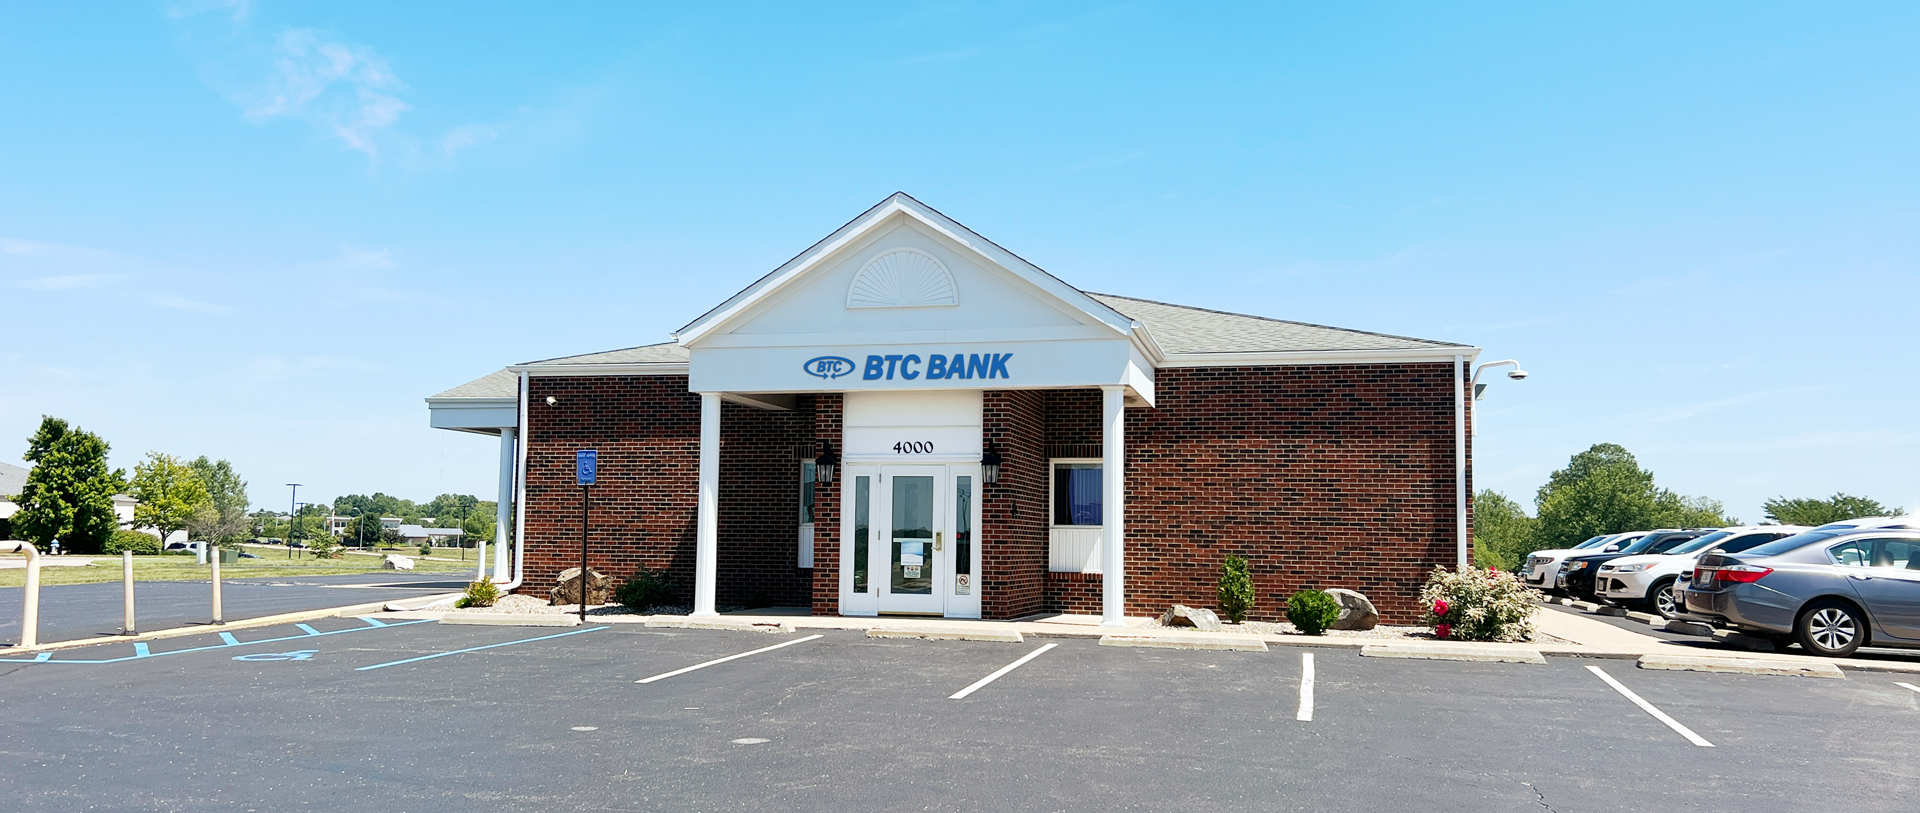 BTC Bank Columbia, Missouri photo of branch building